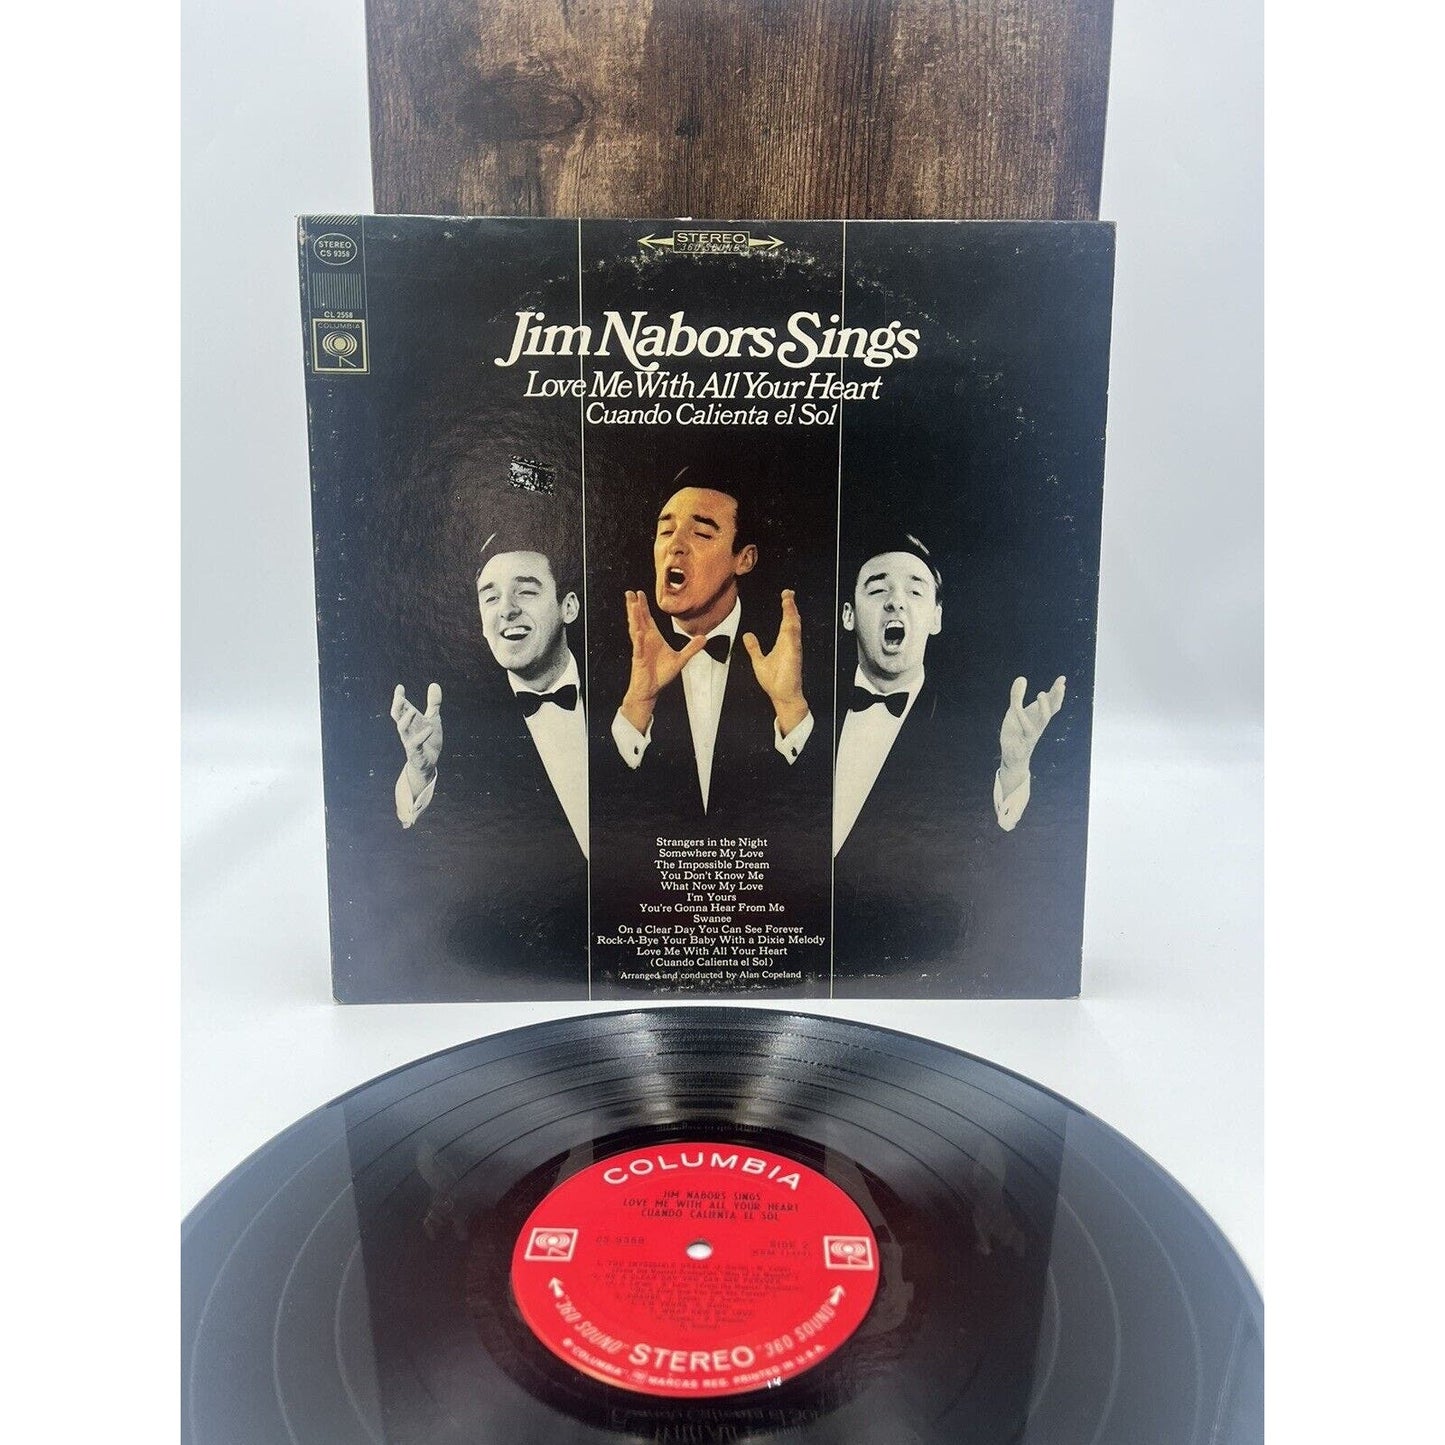 Jim Nabors "Jim Nabors Sings" Vinyl - Columbia Records CL 2558